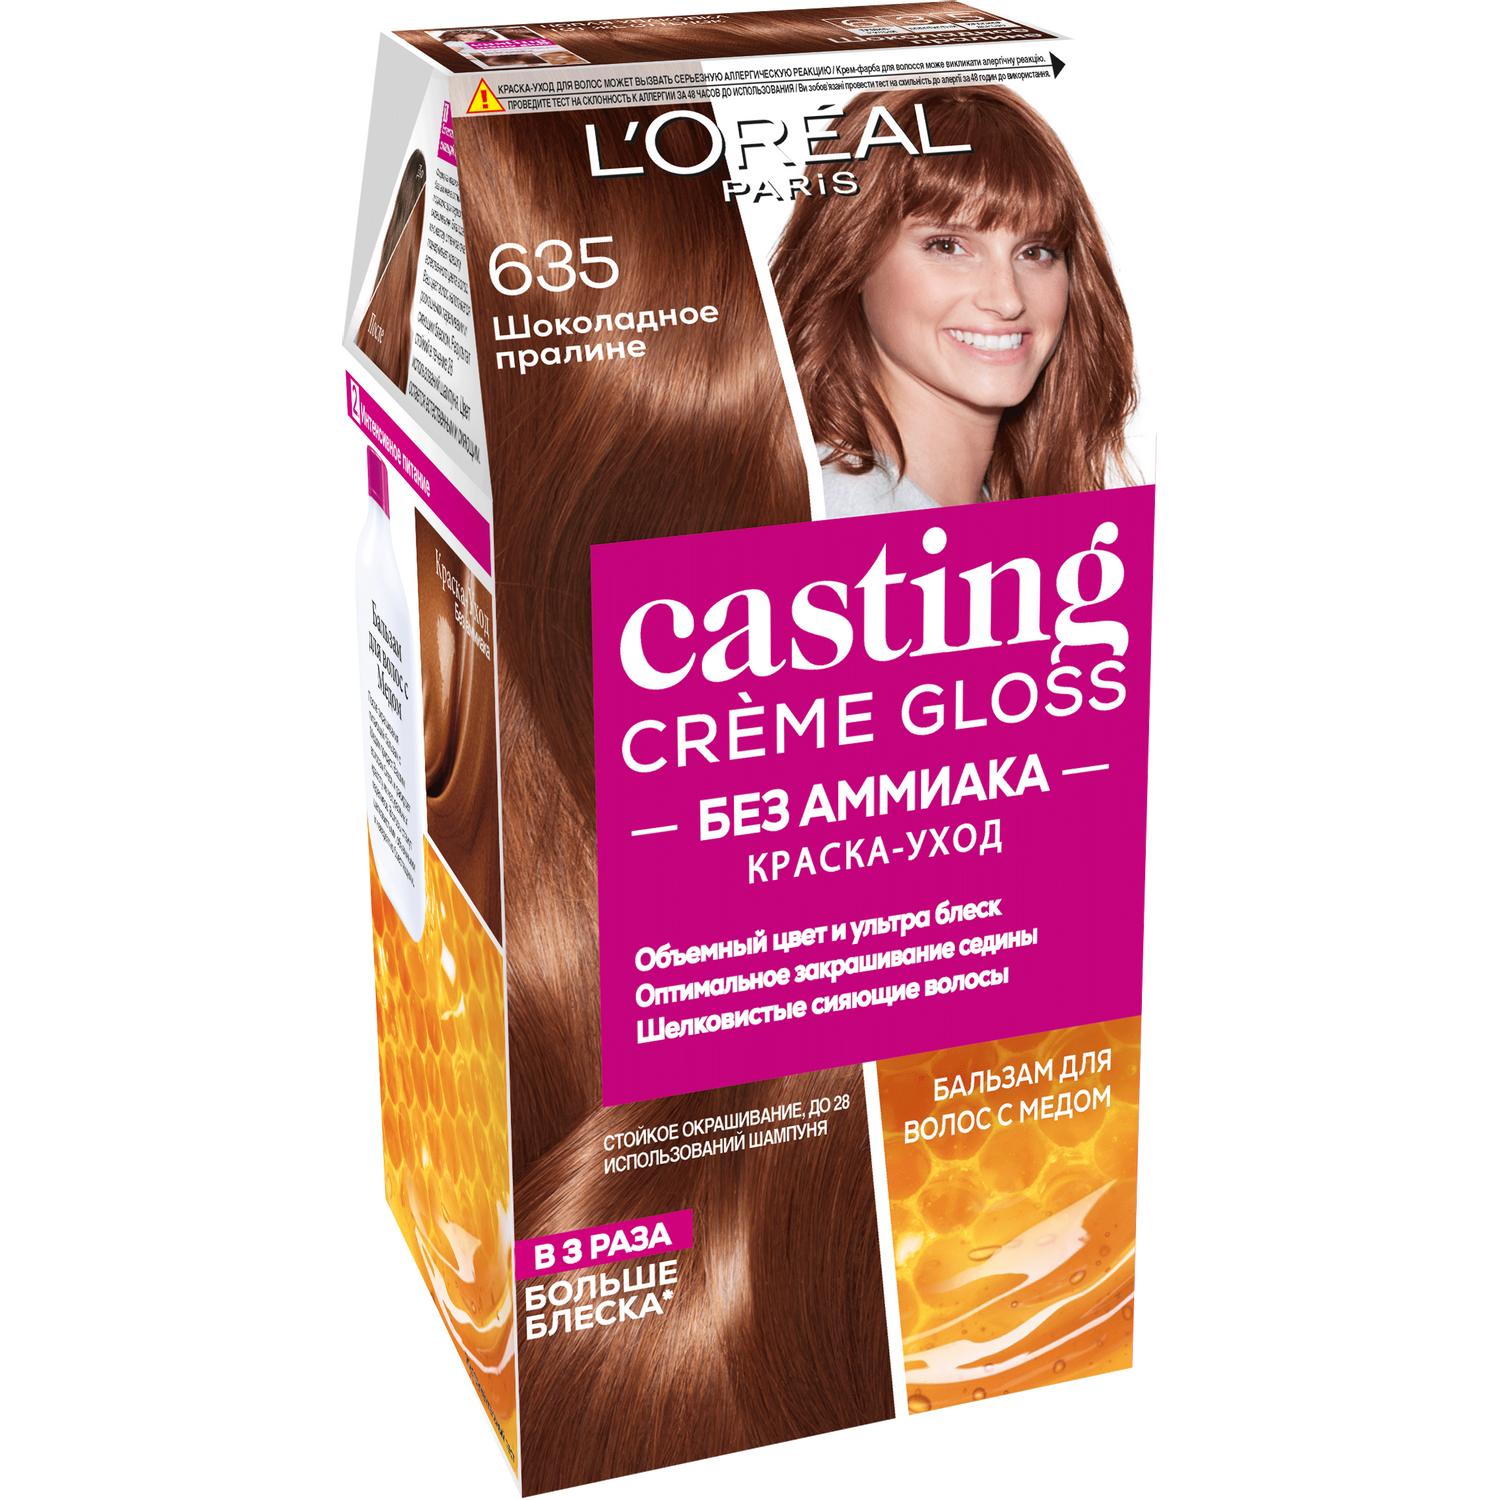 фото Краска для волос l'oreal paris casting creme gloss 635 шоколадное пралине l'oréal paris